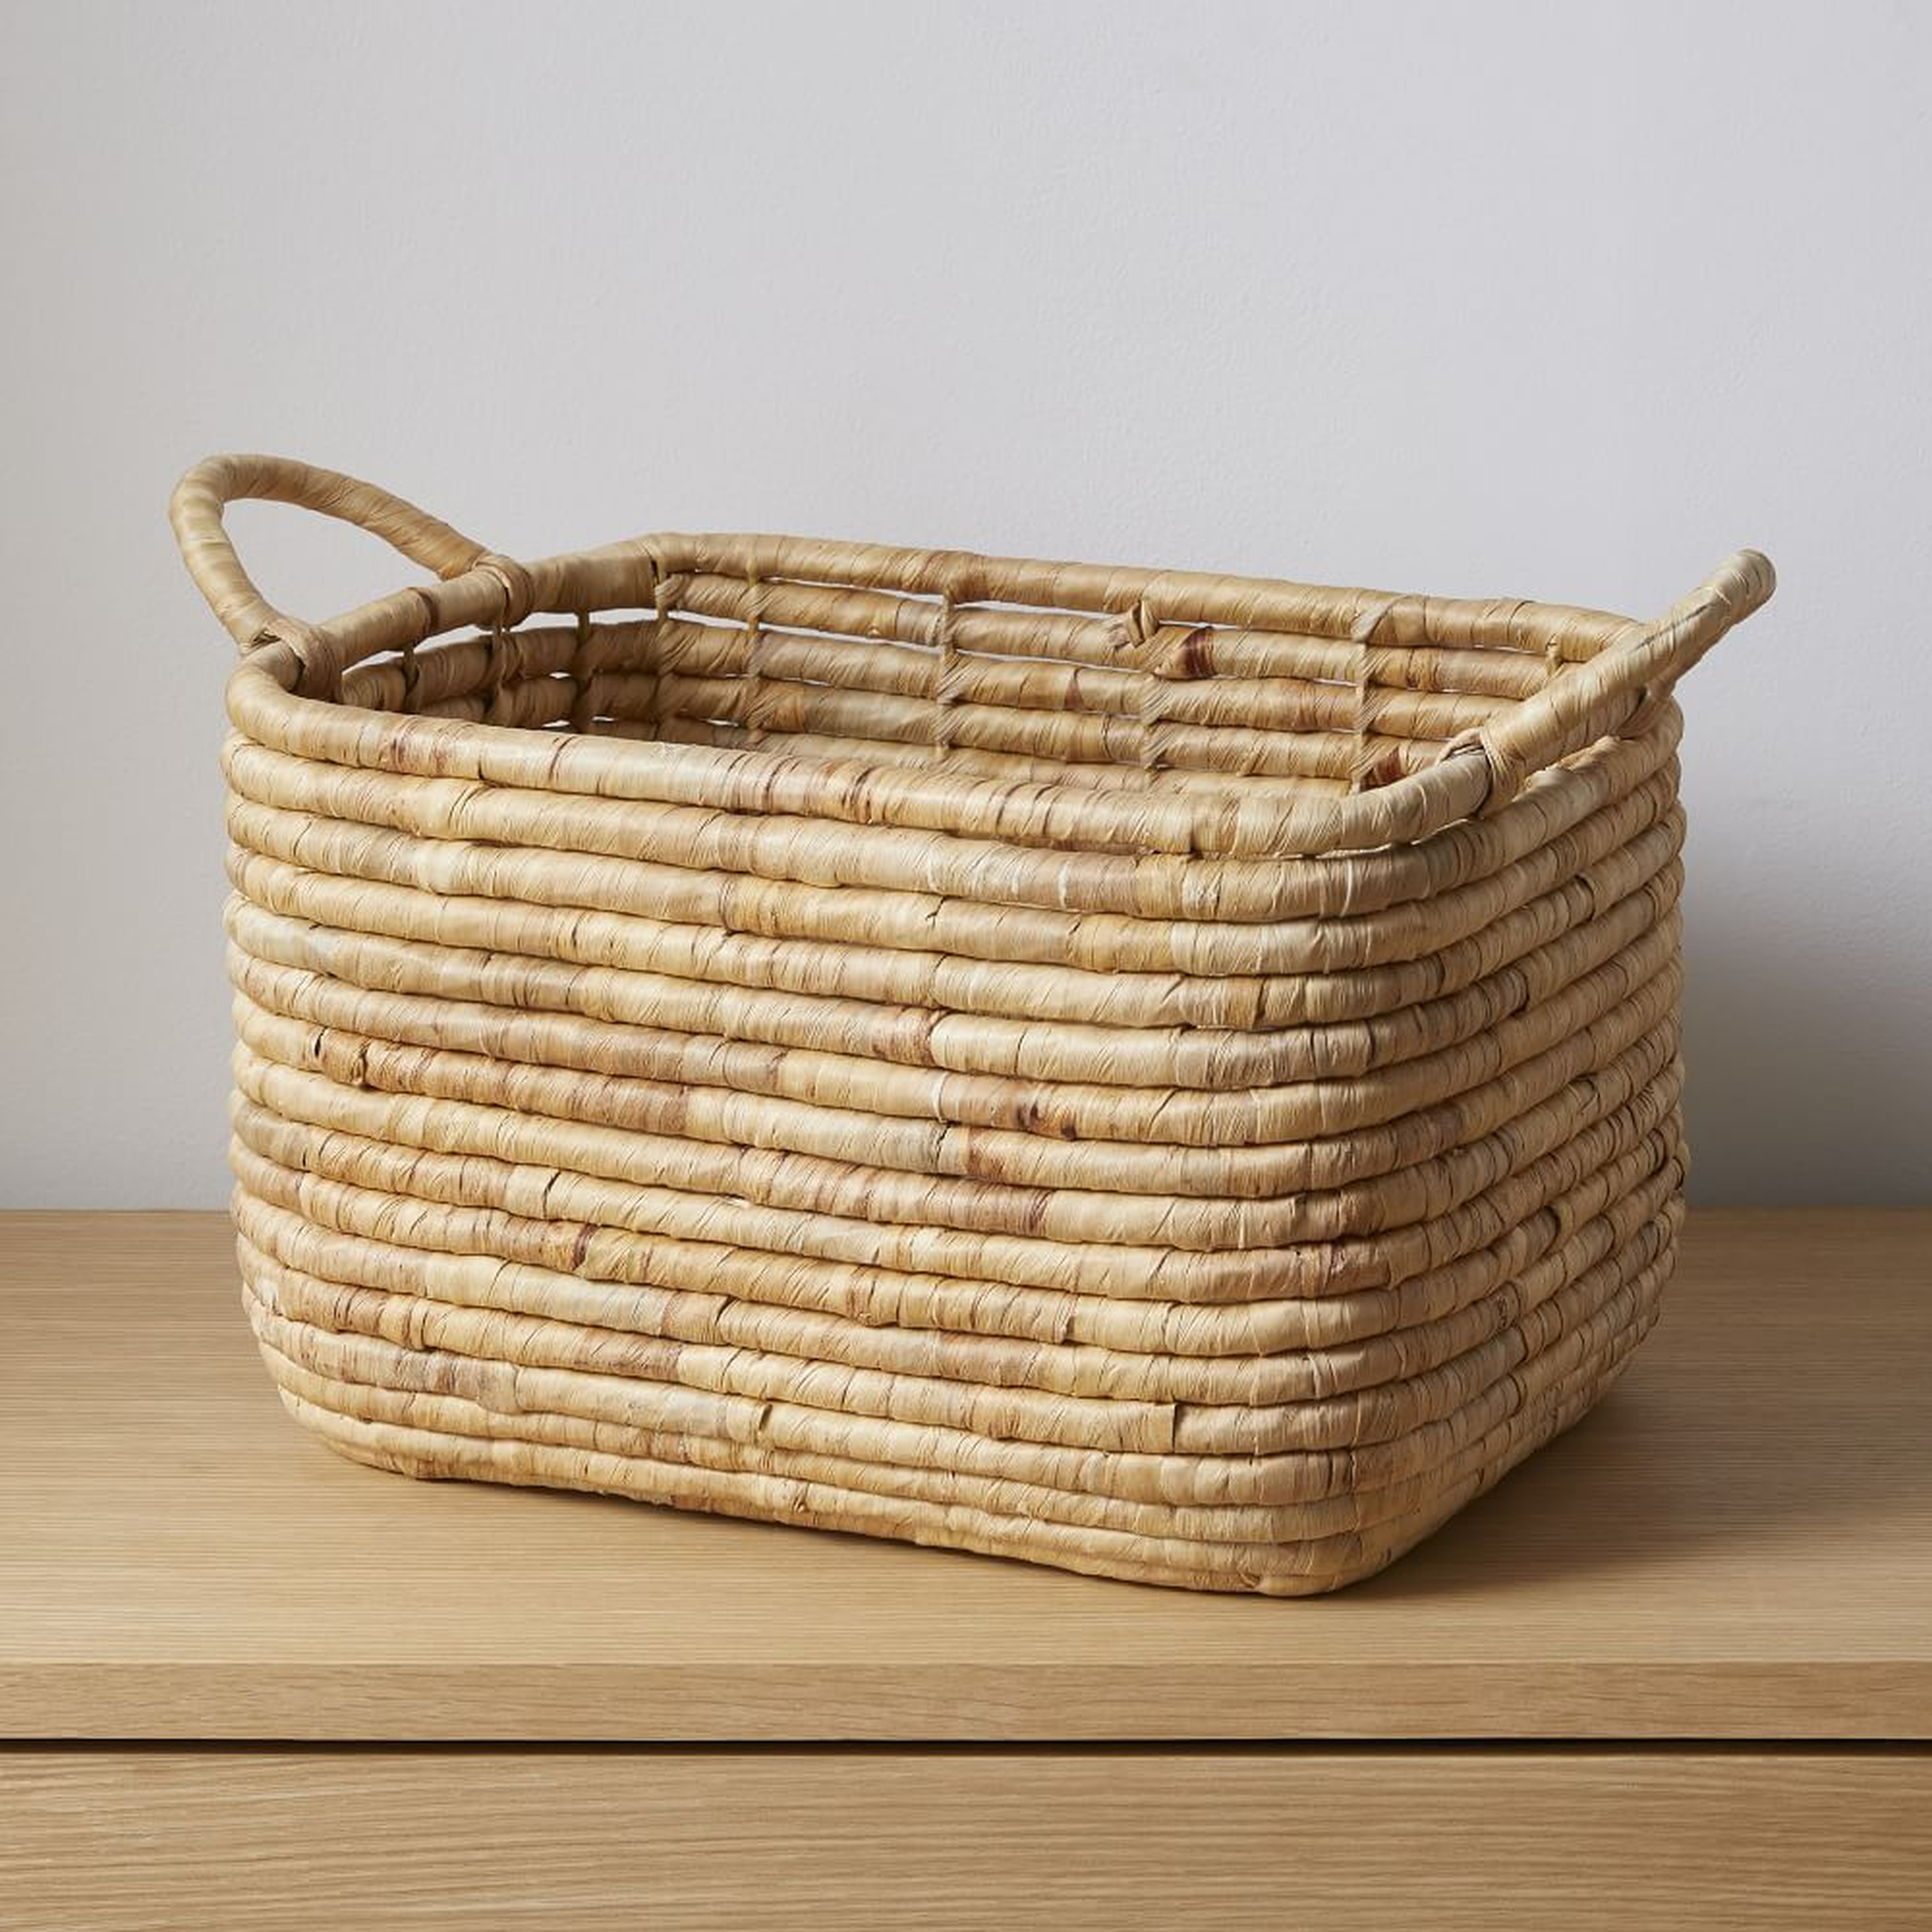 Woven Seagrass, Handle Baskets, Natural, Medium, 16"W x 12.5"D x 10.5"H - West Elm